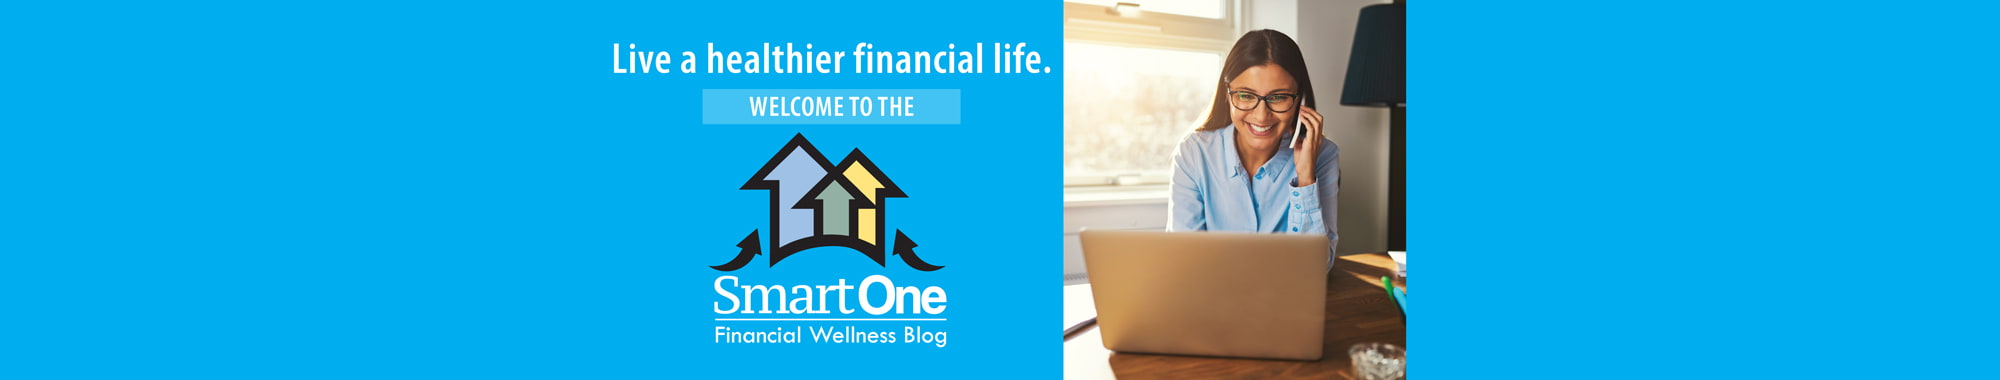 Live a healthier financial life. Welcome to the SmartOne Financial Wellness Blog!